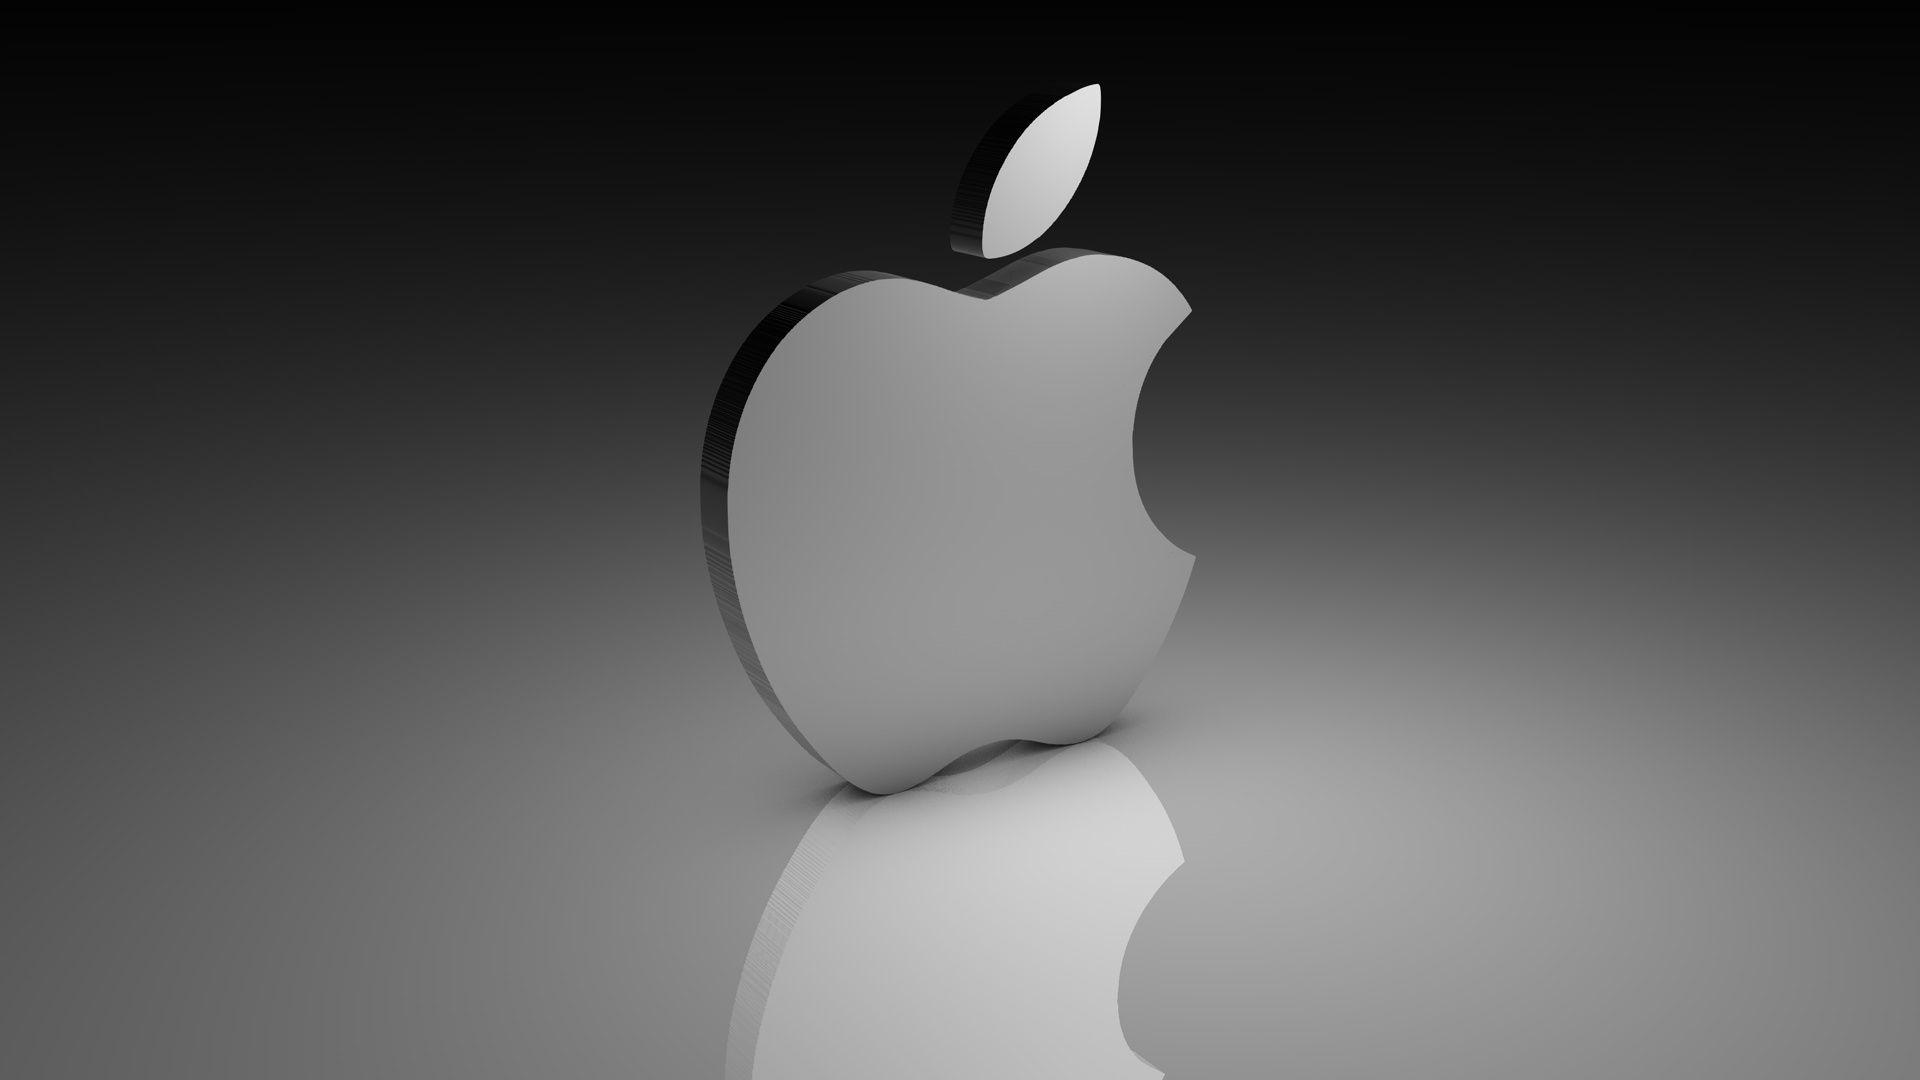 DesktopDigitalClock 5.01 for apple download free